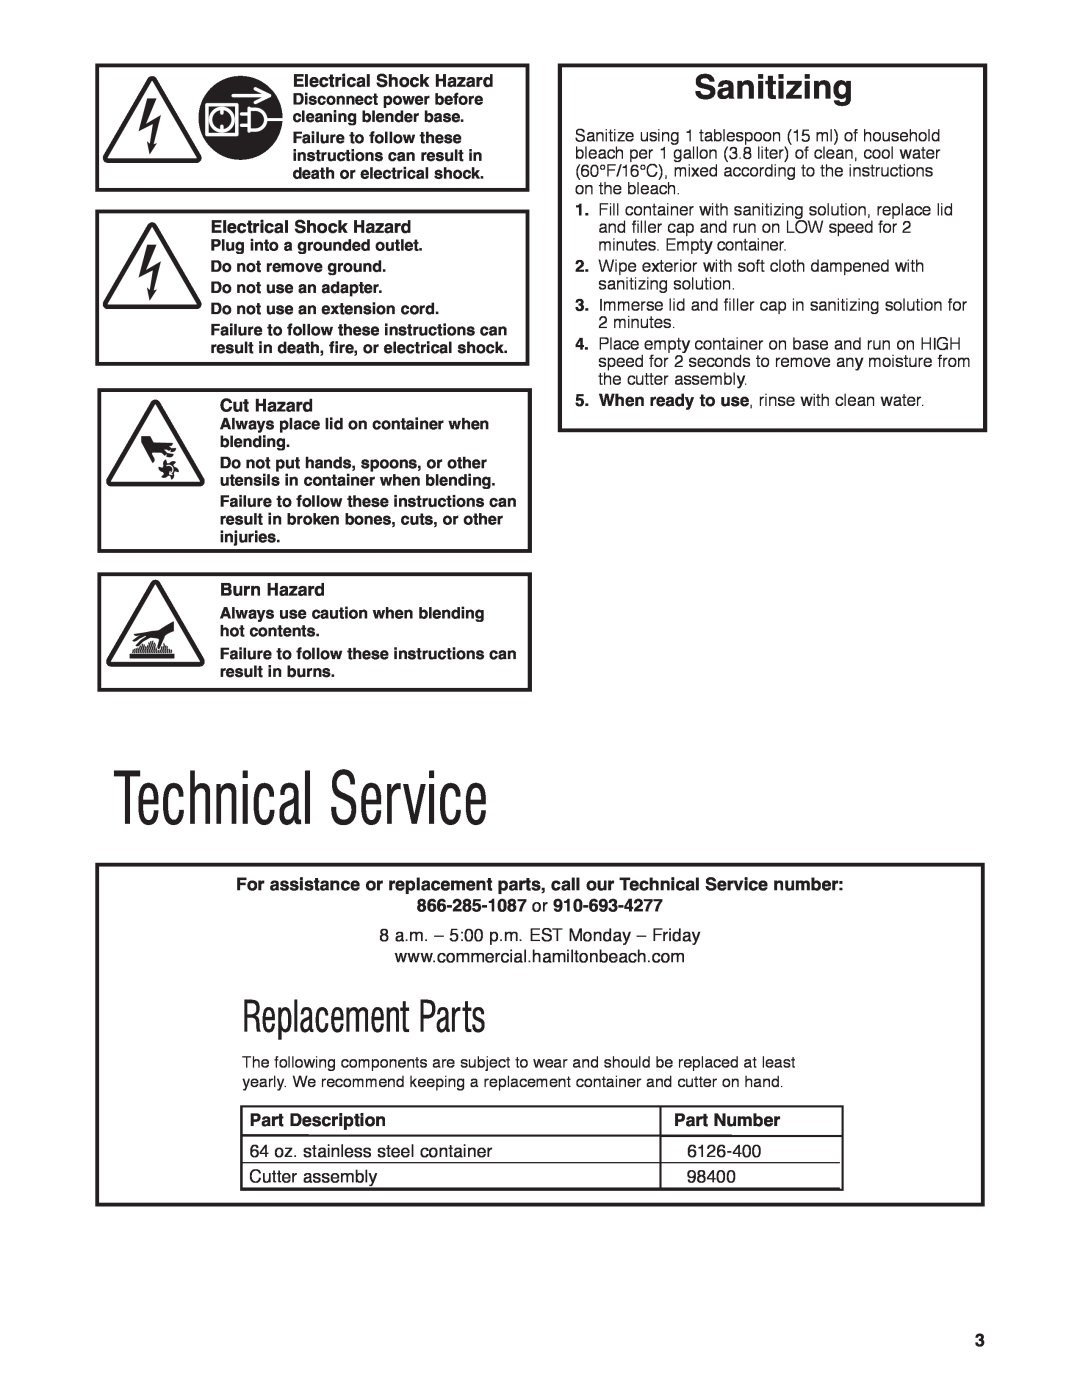 Hamilton Beach HBF400 Technical Service, Replacement Parts, Sanitizing, Electrical Shock Hazard, Cut Hazard, Burn Hazard 